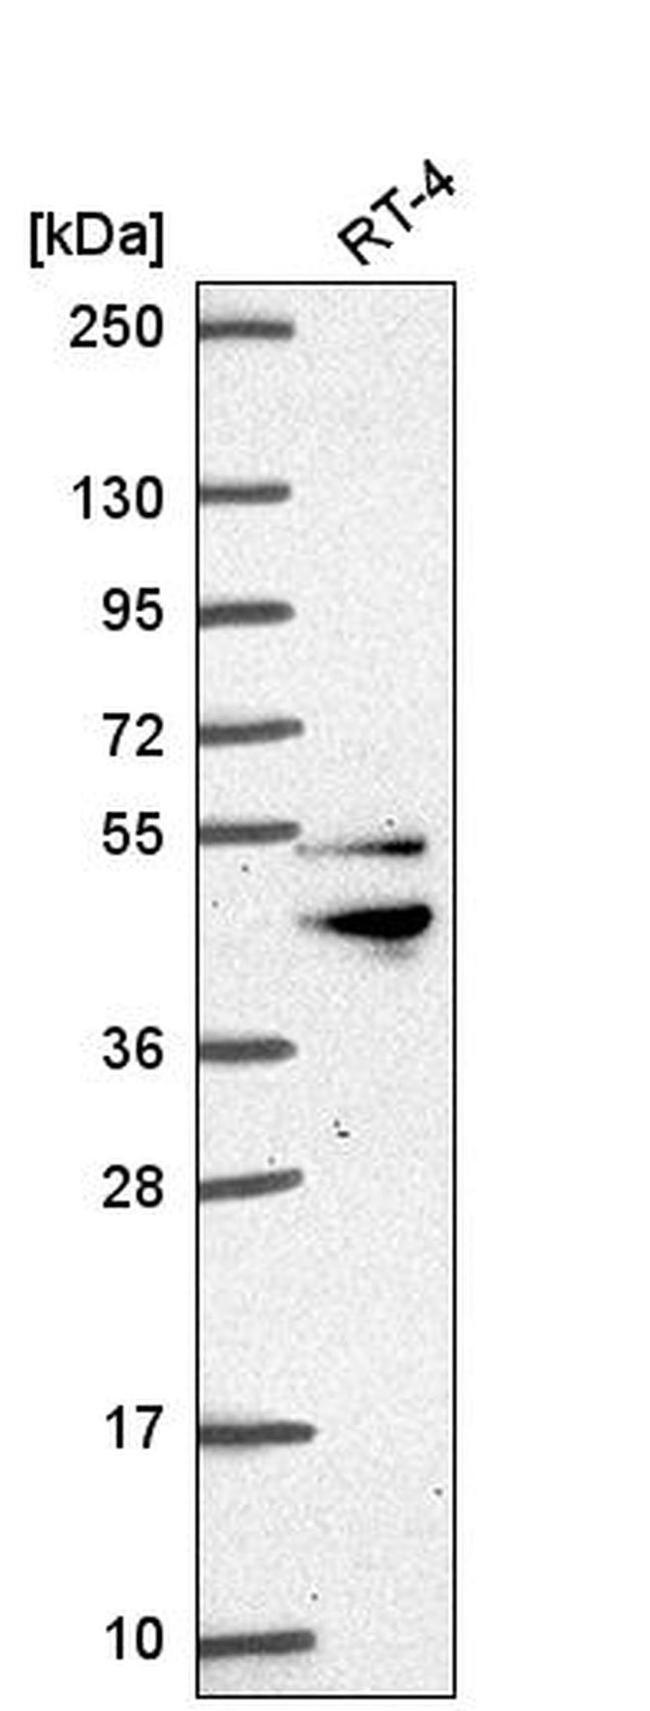 ZFYVE27 Antibody in Western Blot (WB)